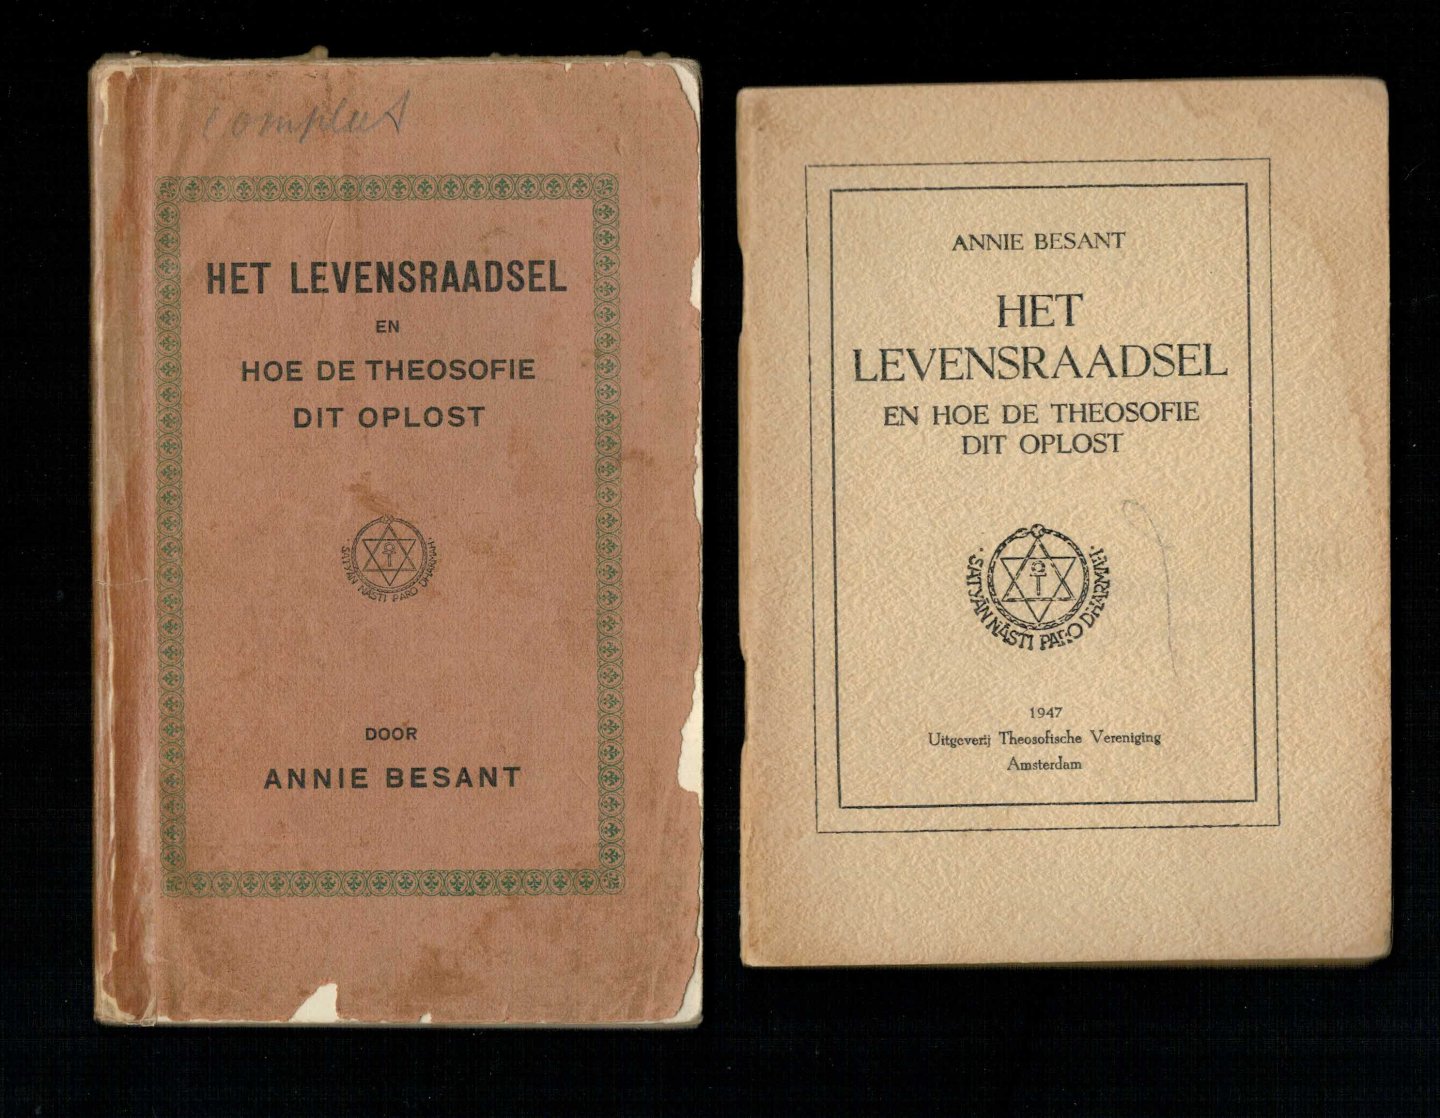 Besant, Annie - Het levensraadsel en hoe de theosofie dit oplost  2 uitgaven 1911 en 1947